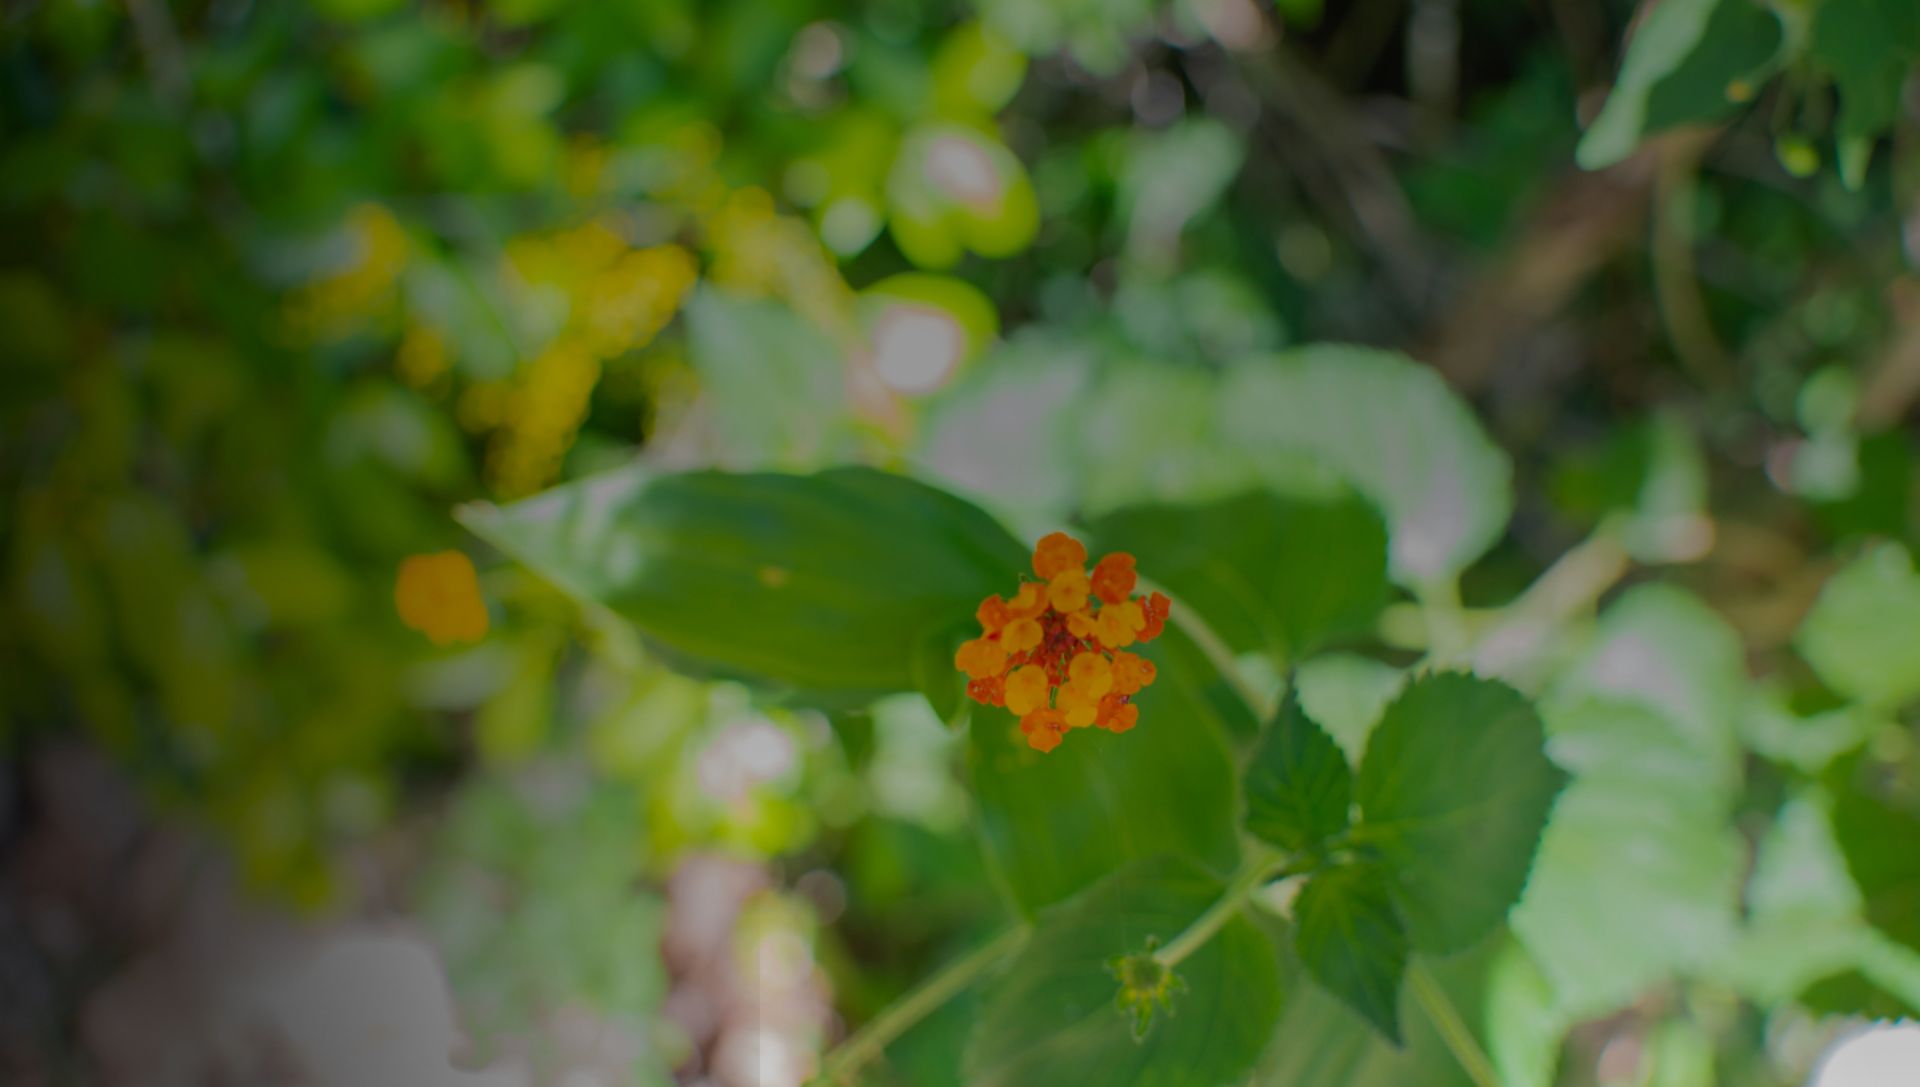 Tsukan Santuario de Vida naturaleza vegetacion planta verde flor naranja